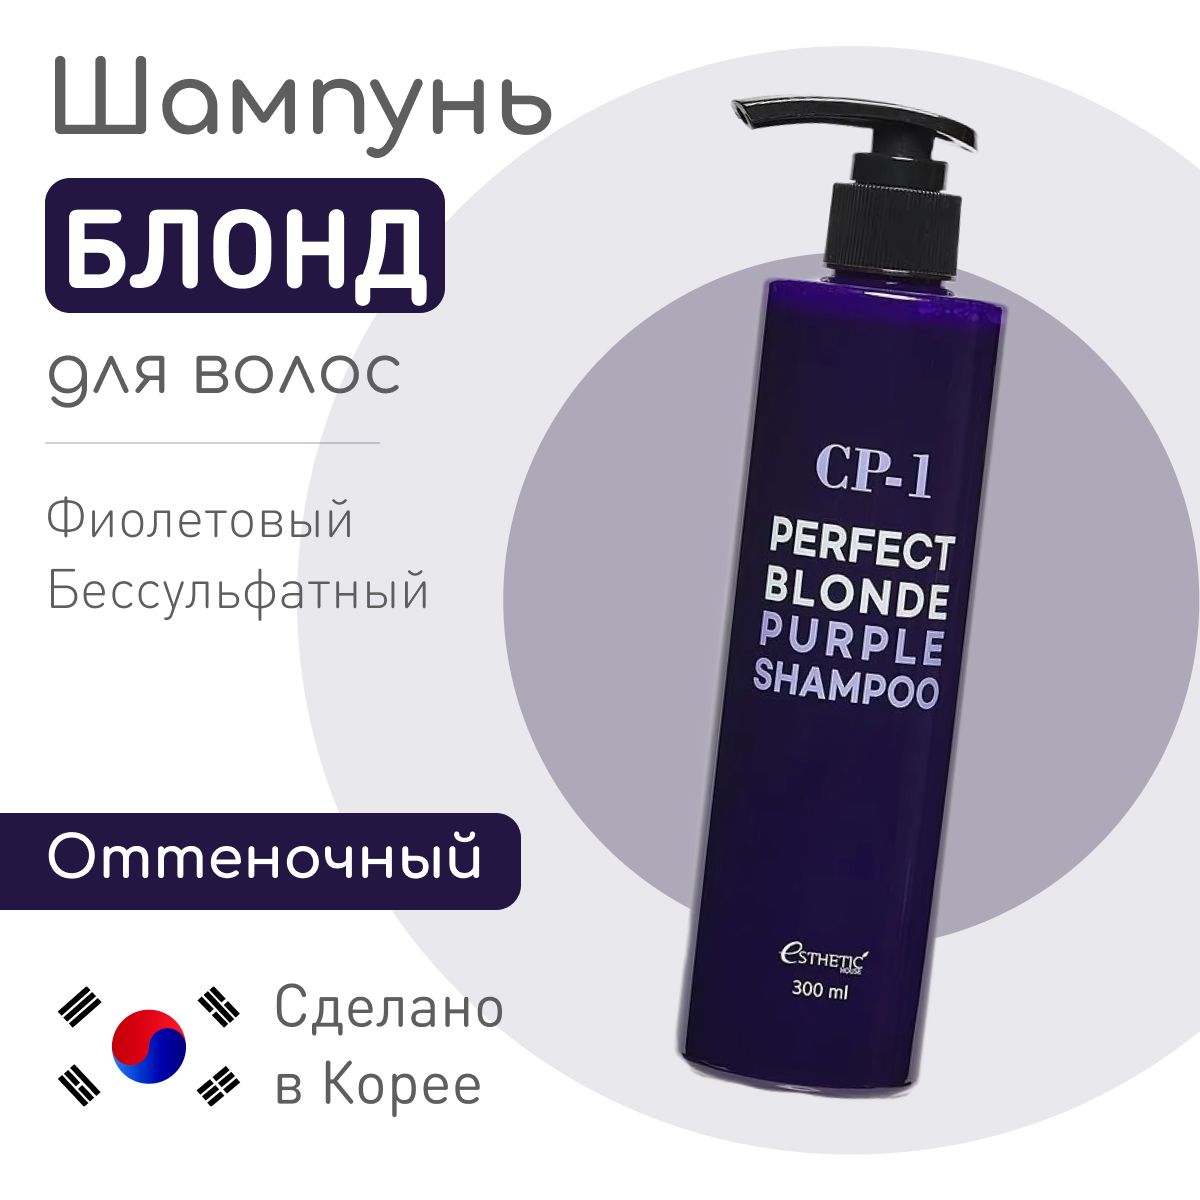 ESTHETIC HOUSE Шампунь для осветлённых волос, CP-1 PERFECT BLONDE PURPLE SHAMPOO, 300 мл